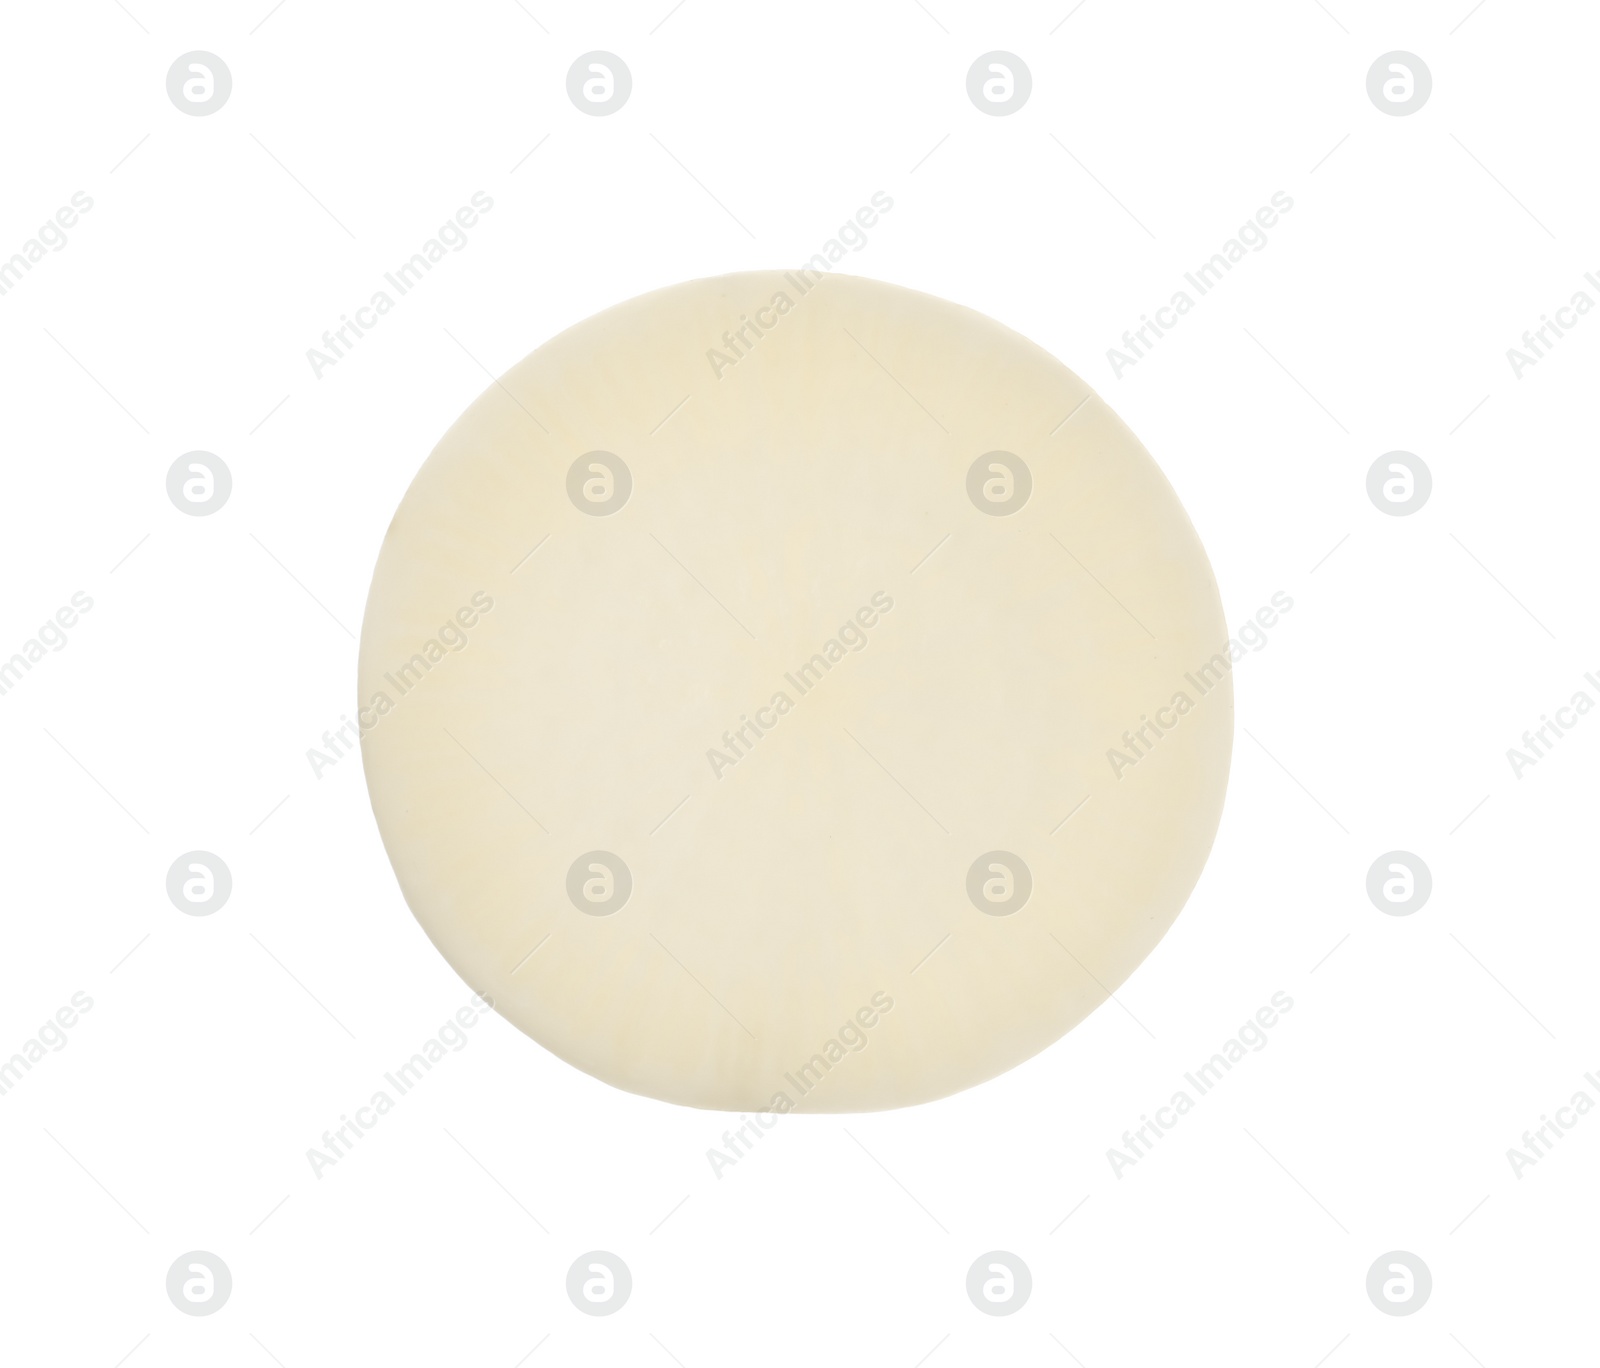 Photo of Slice of fresh ripe turnip on white background